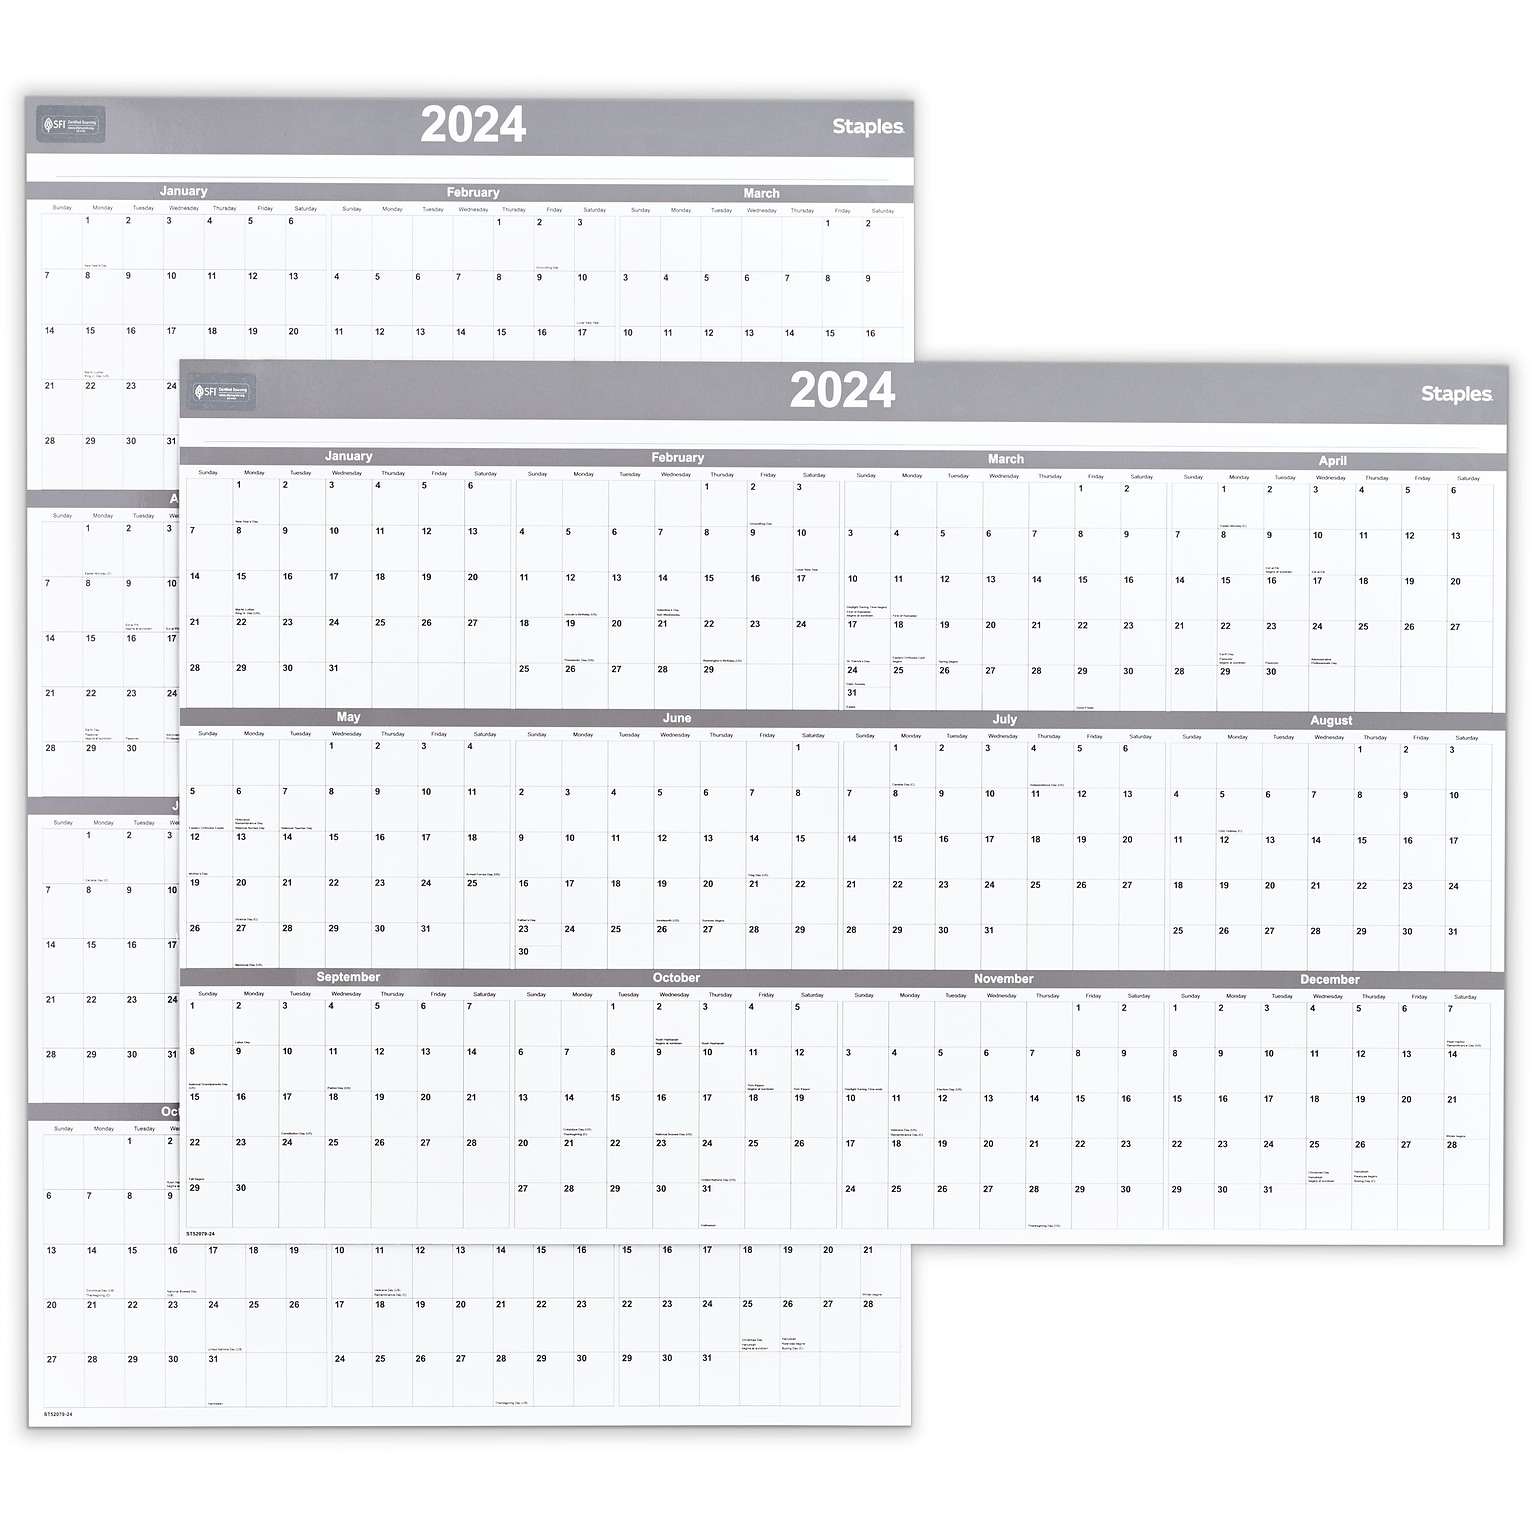 2025 Staples 36 x 24 Dry Erase Wall Calendar, Gray/White (ST52079-25)